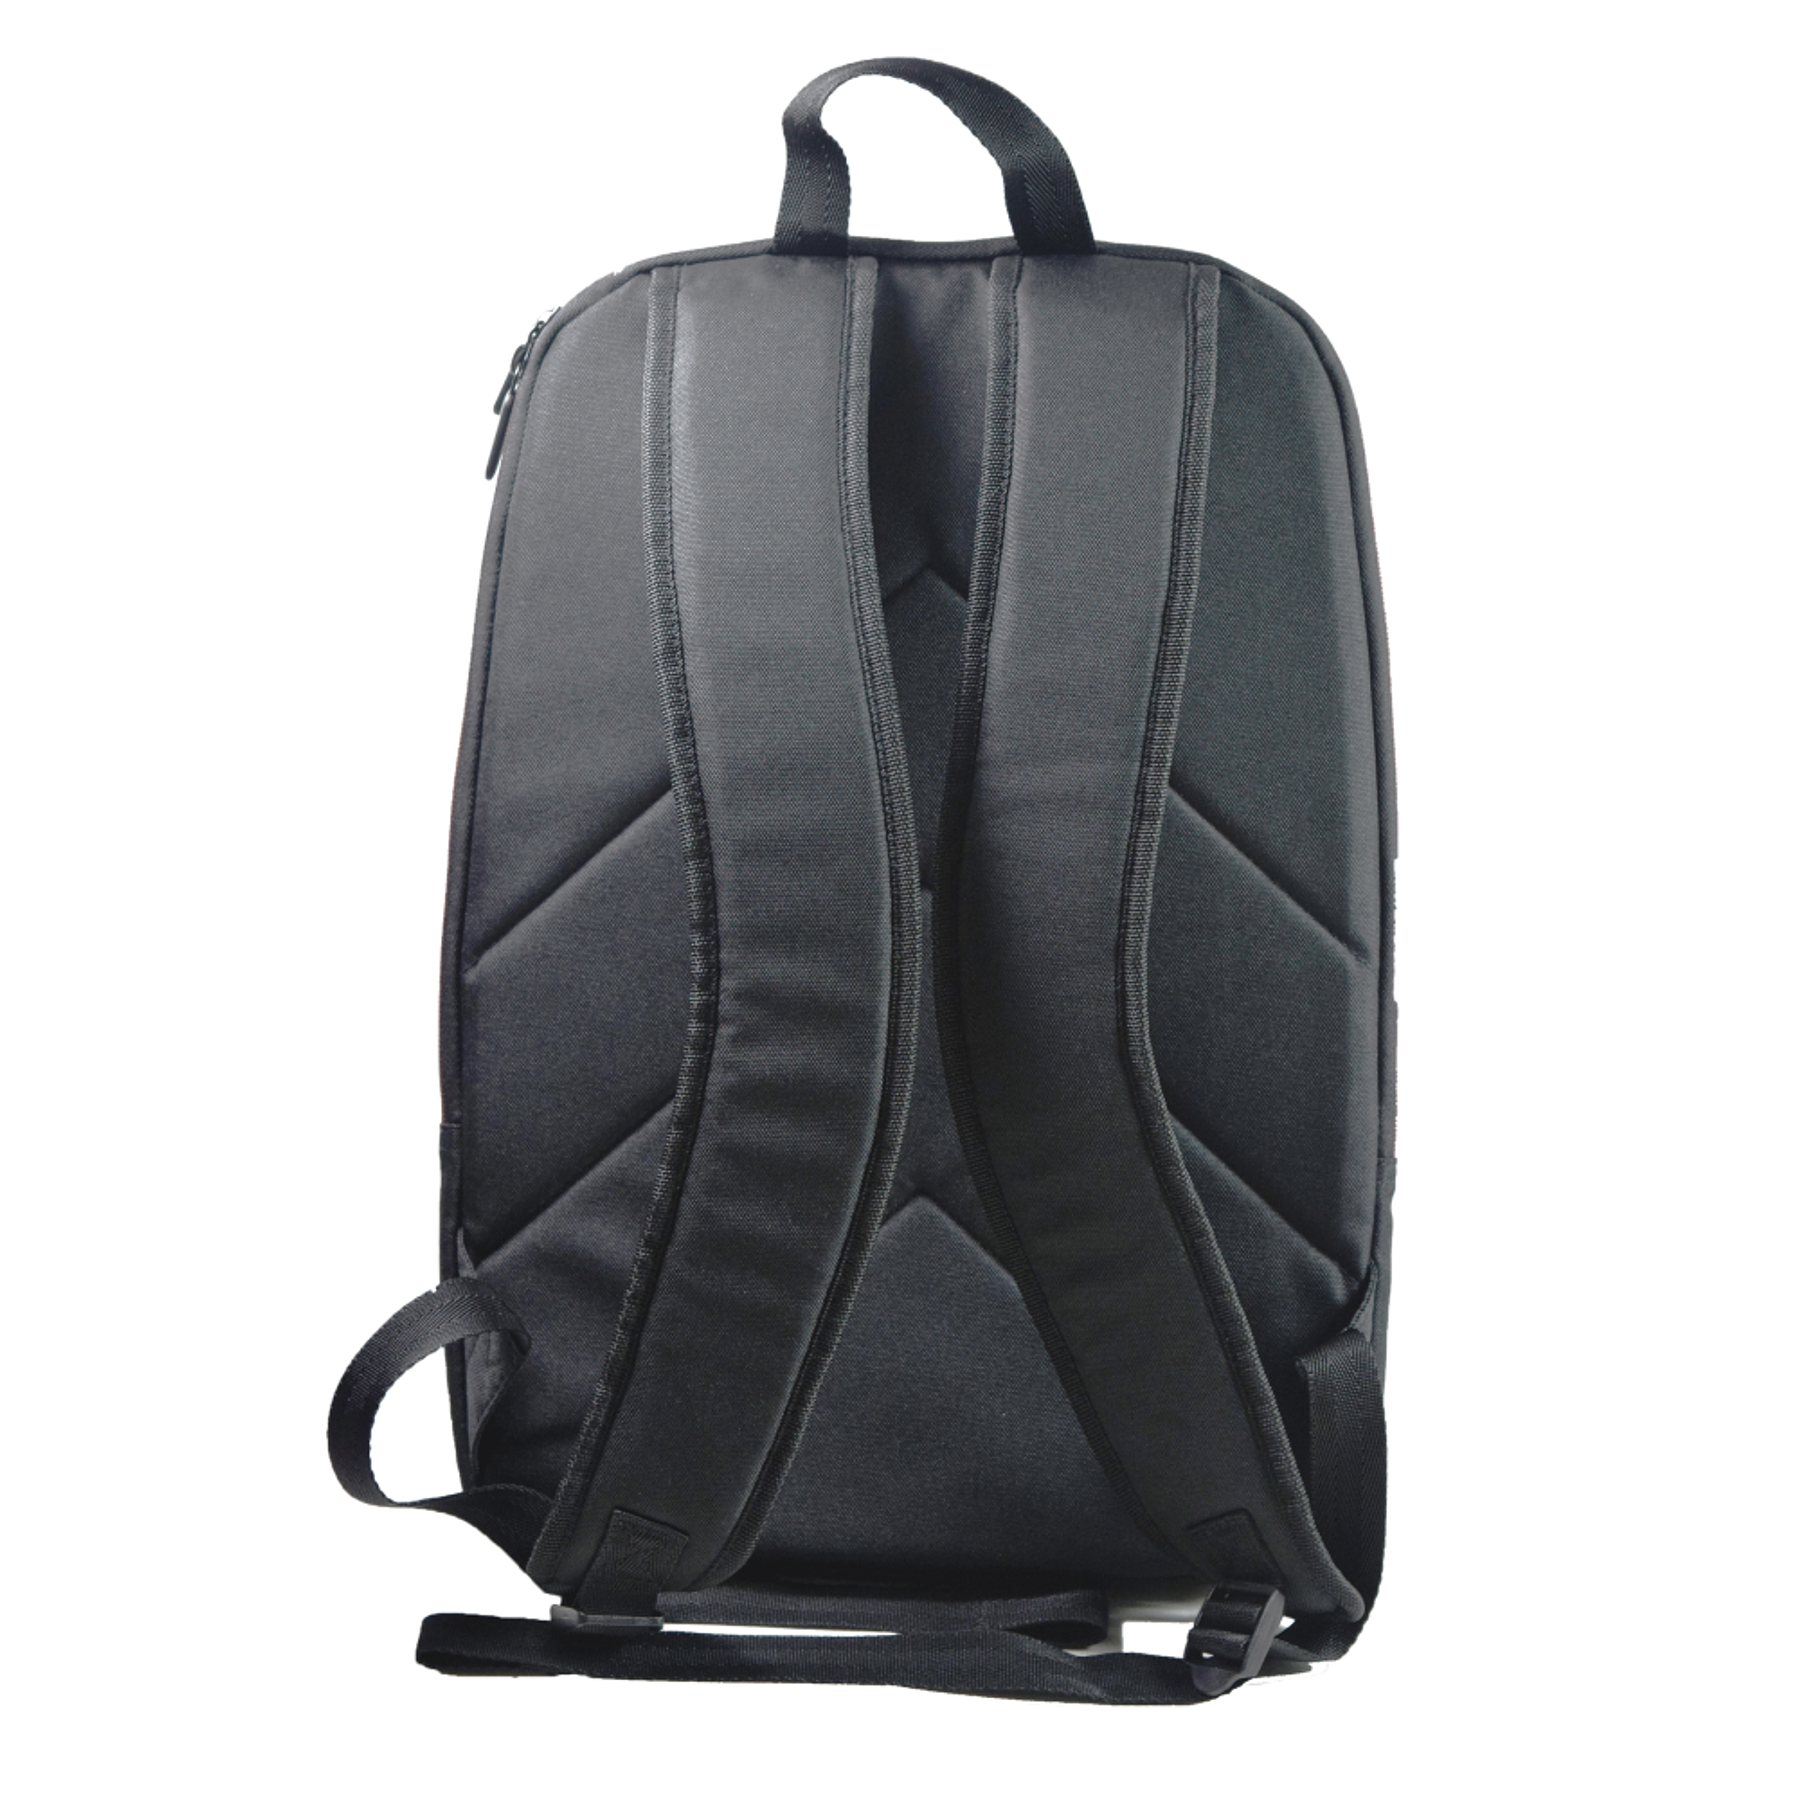 ASUS Nereus Backpack Mochila Color Negro